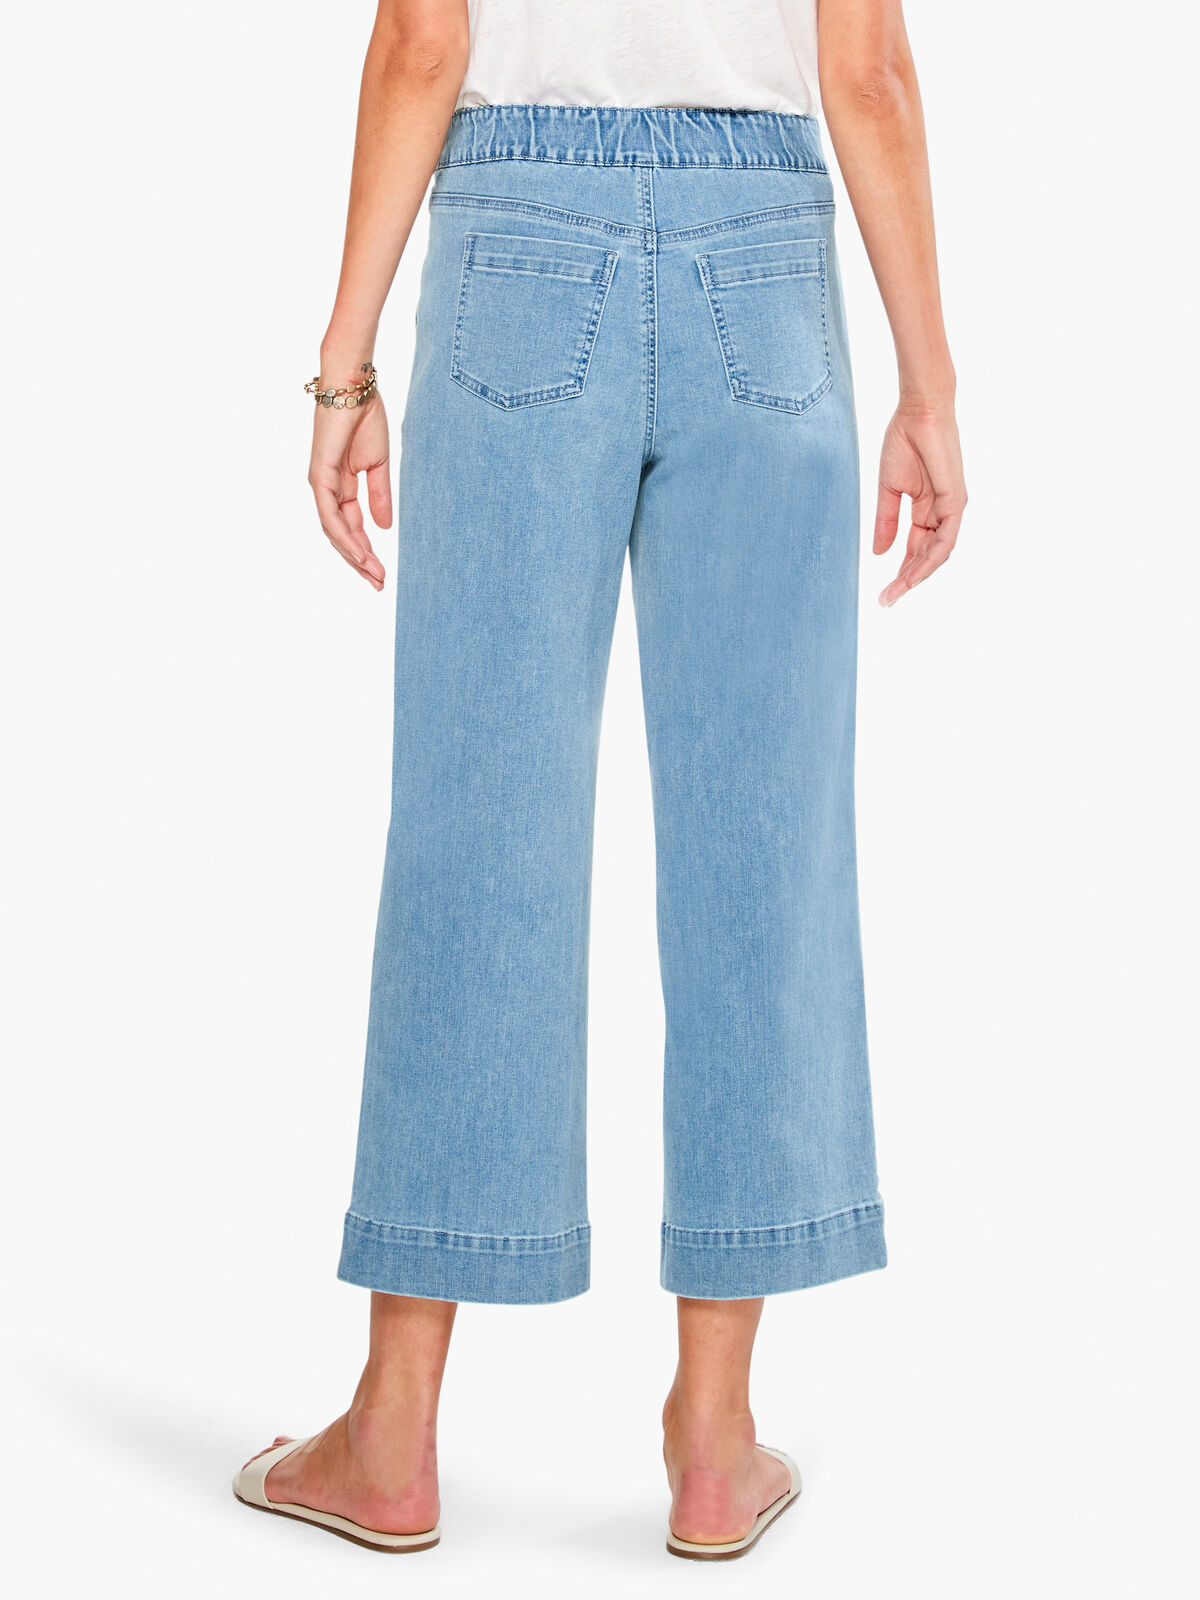 All Day Wide-Leg Pocket Jean